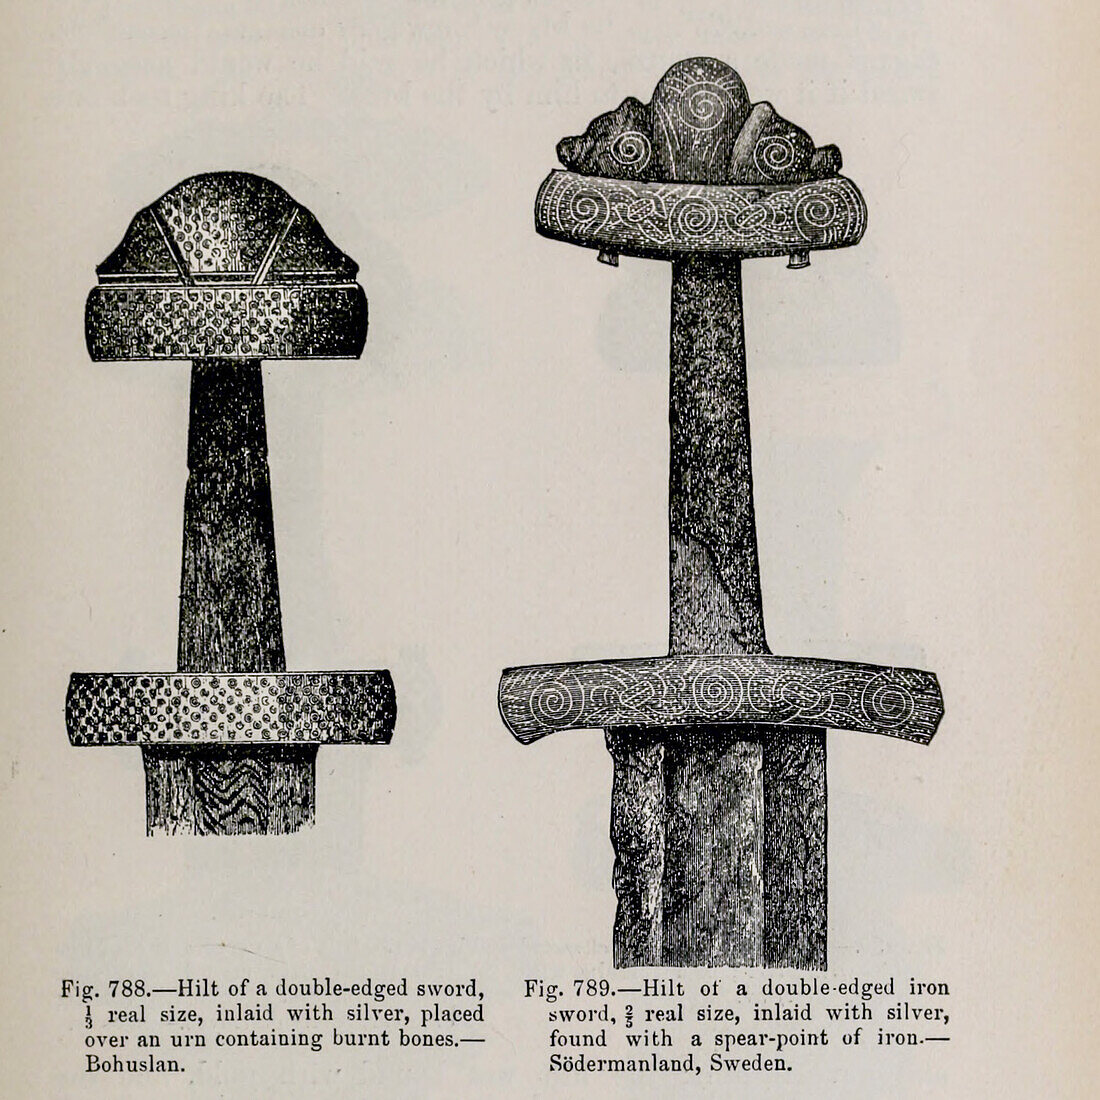 Viking age iron swords, 19th century illustration